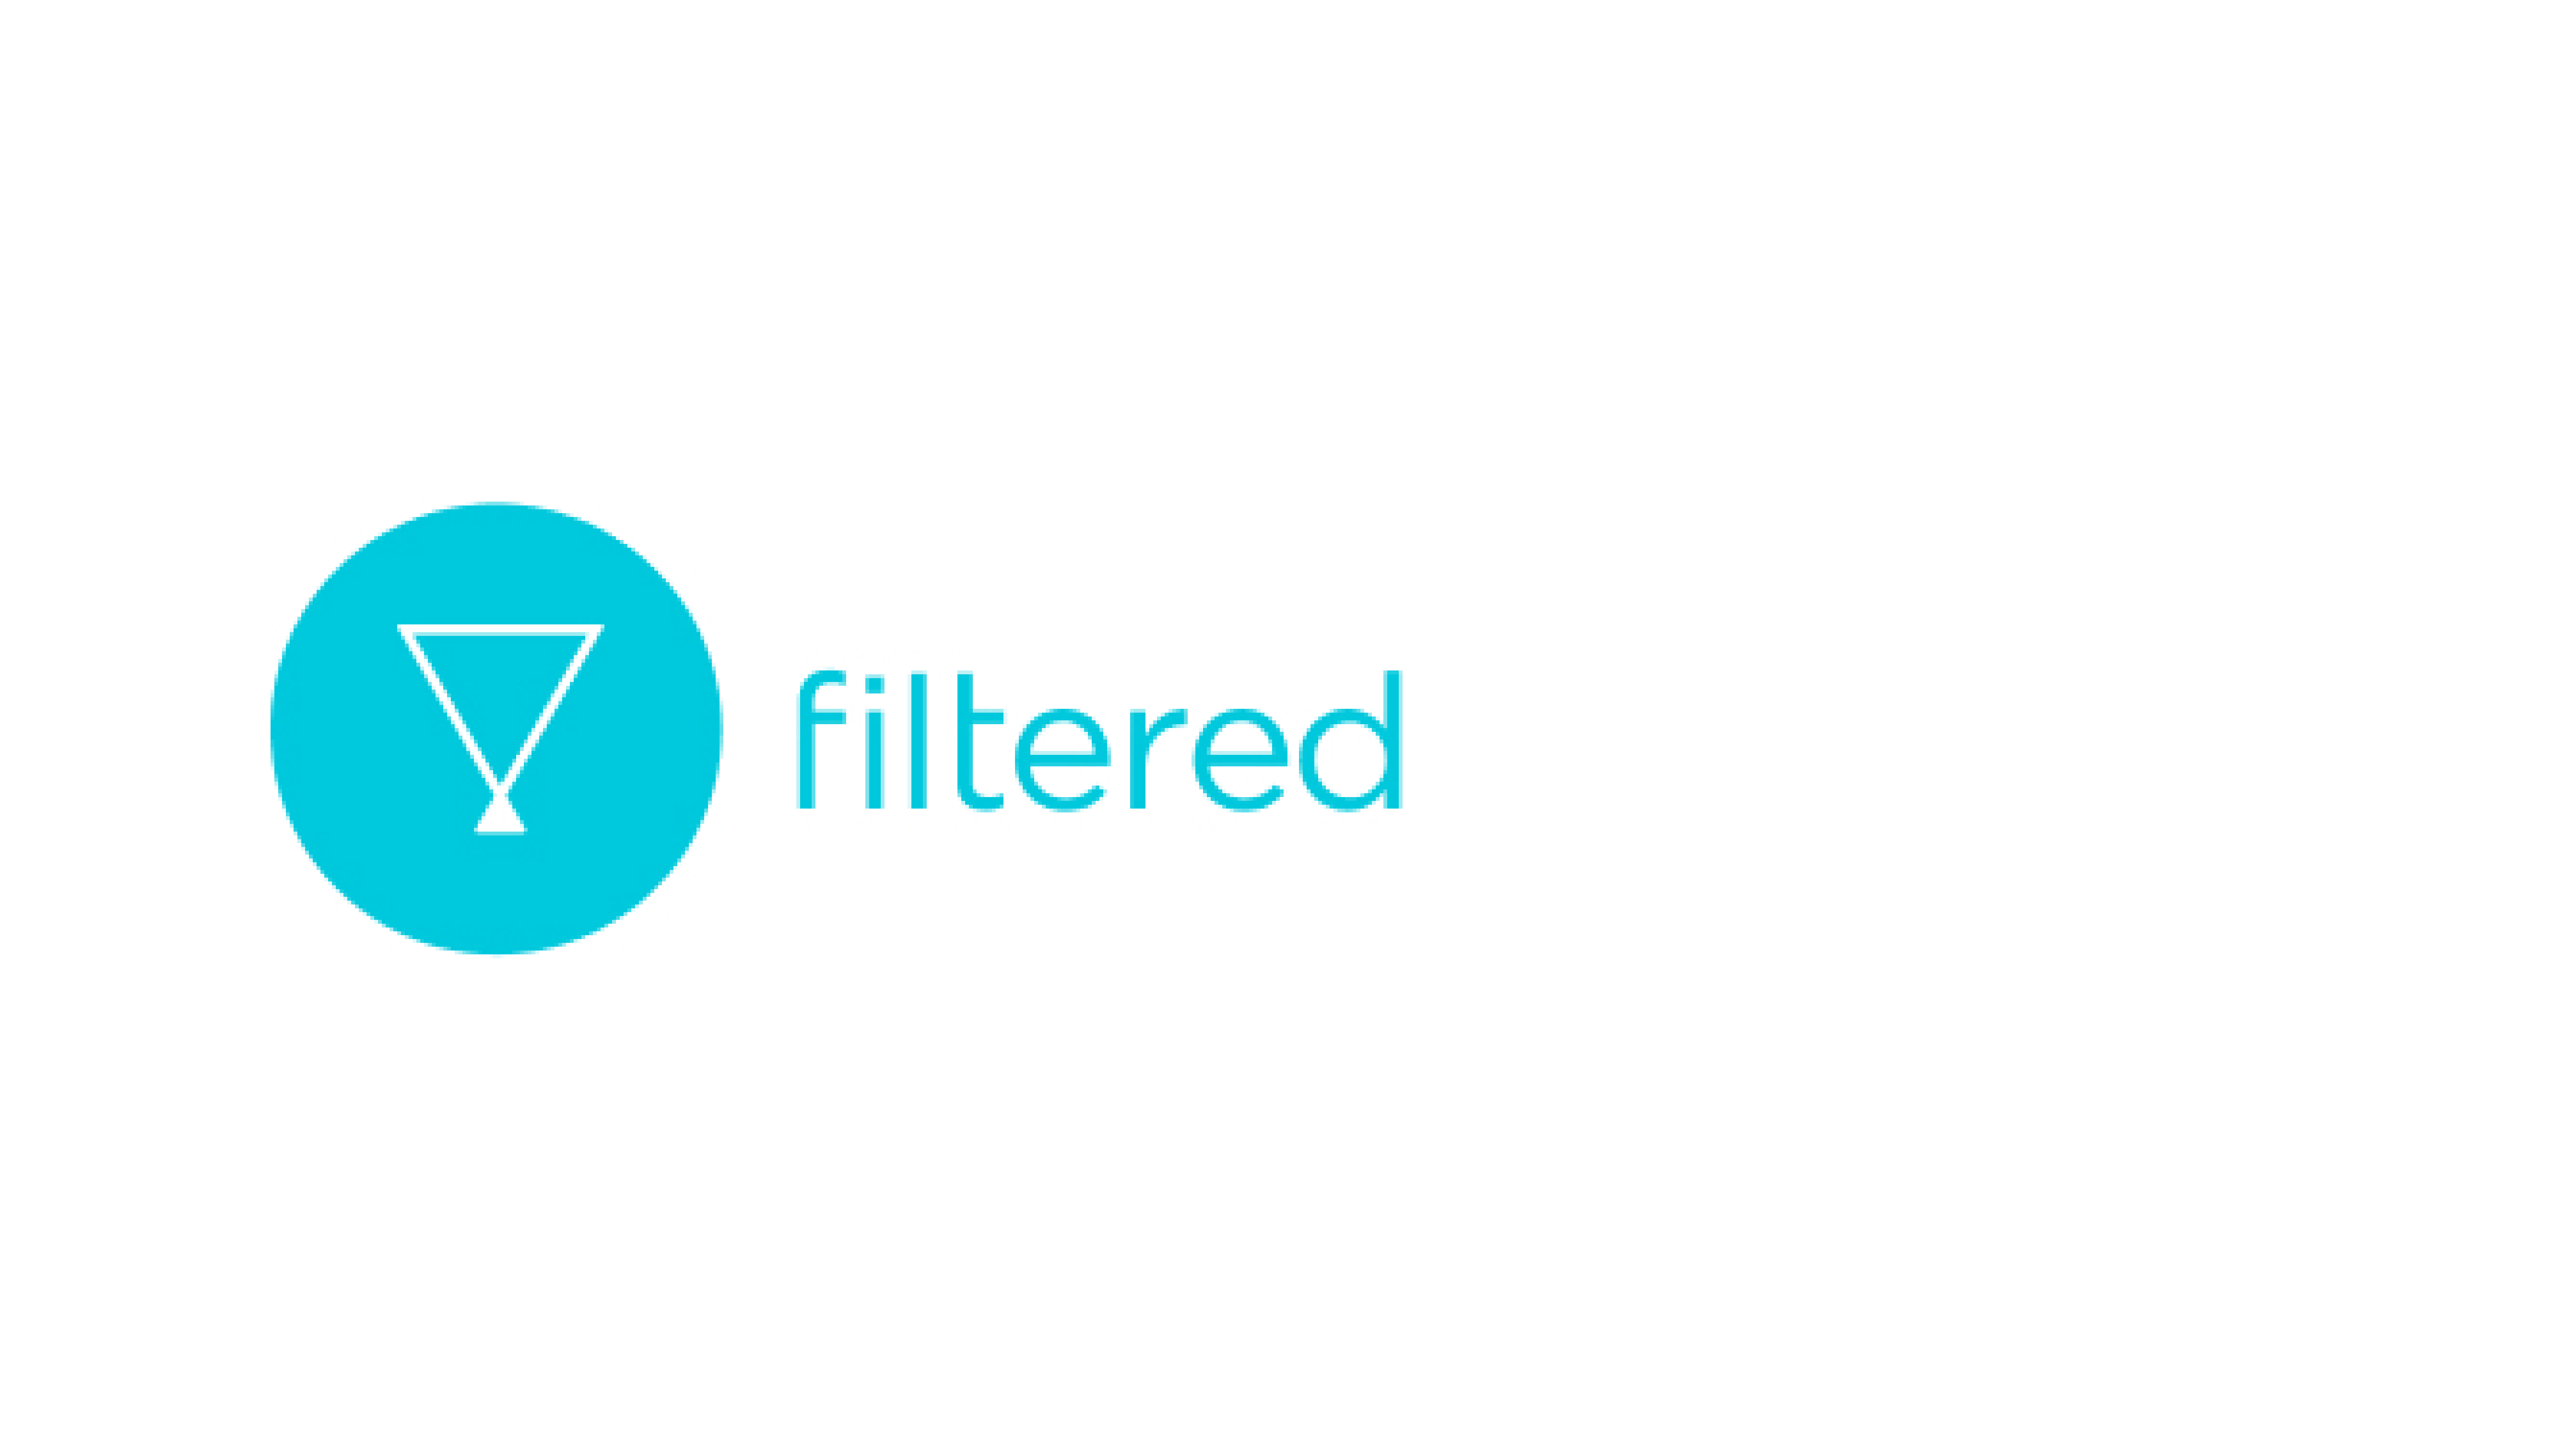 Filtered logo